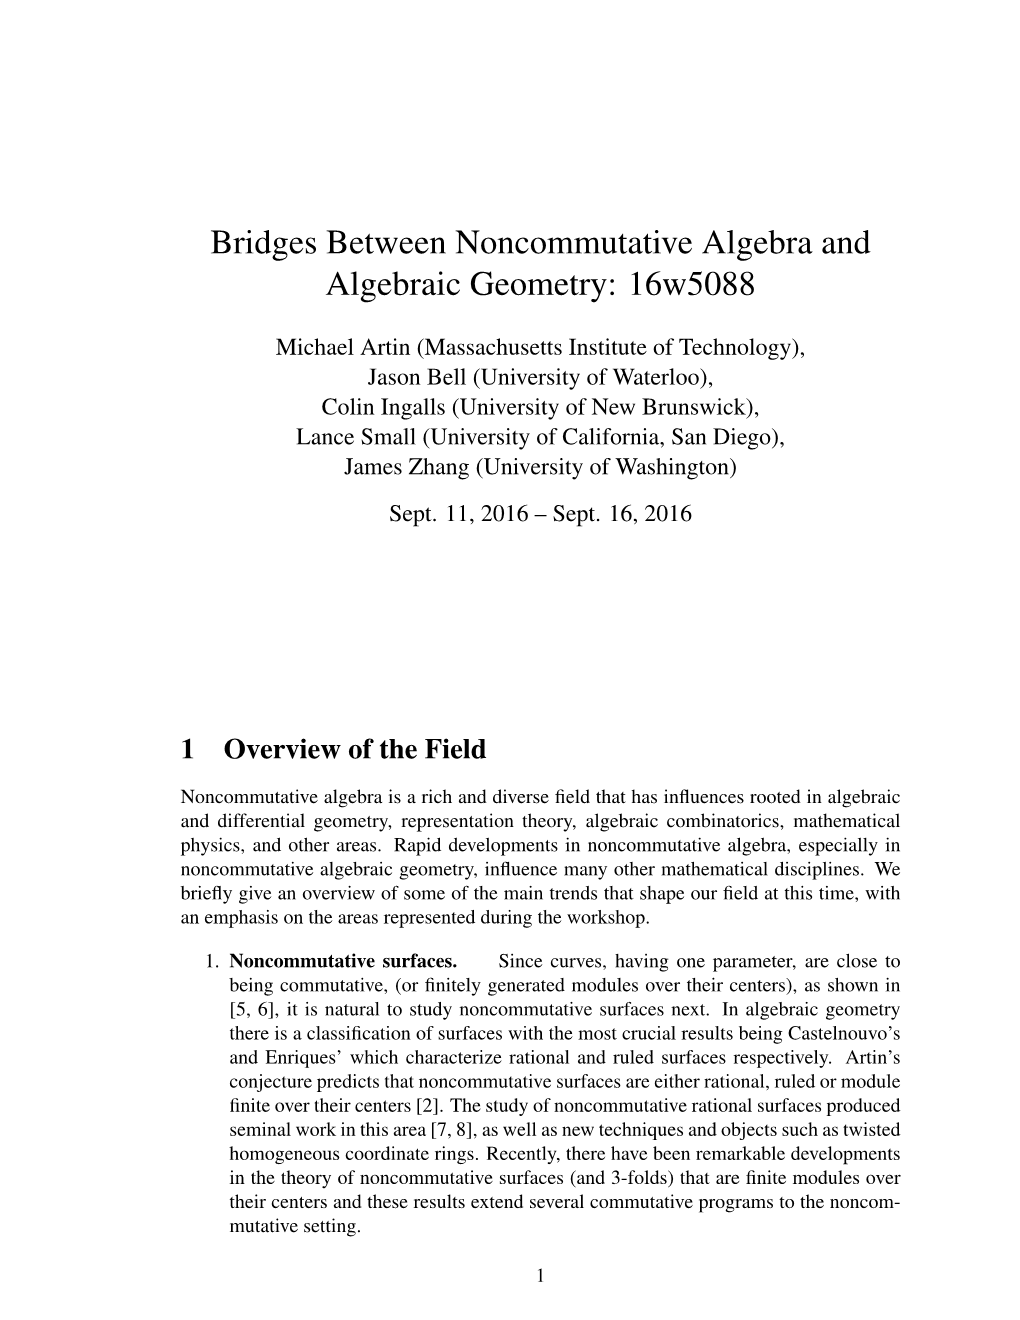 Bridges Between Noncommutative Algebra and Algebraic Geometry: 16W5088